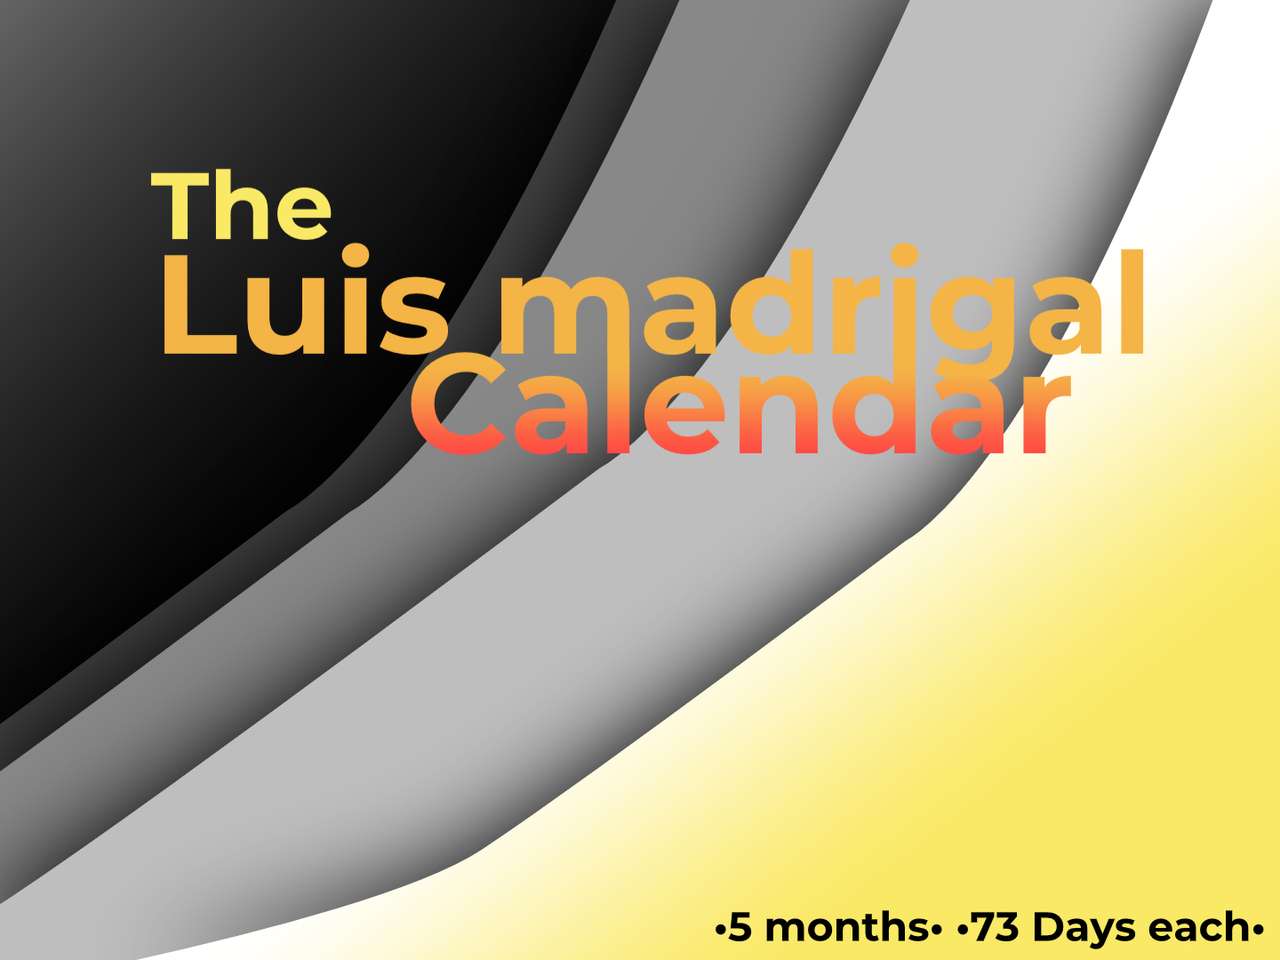 Calendarul Luis Madrigal puzzle online